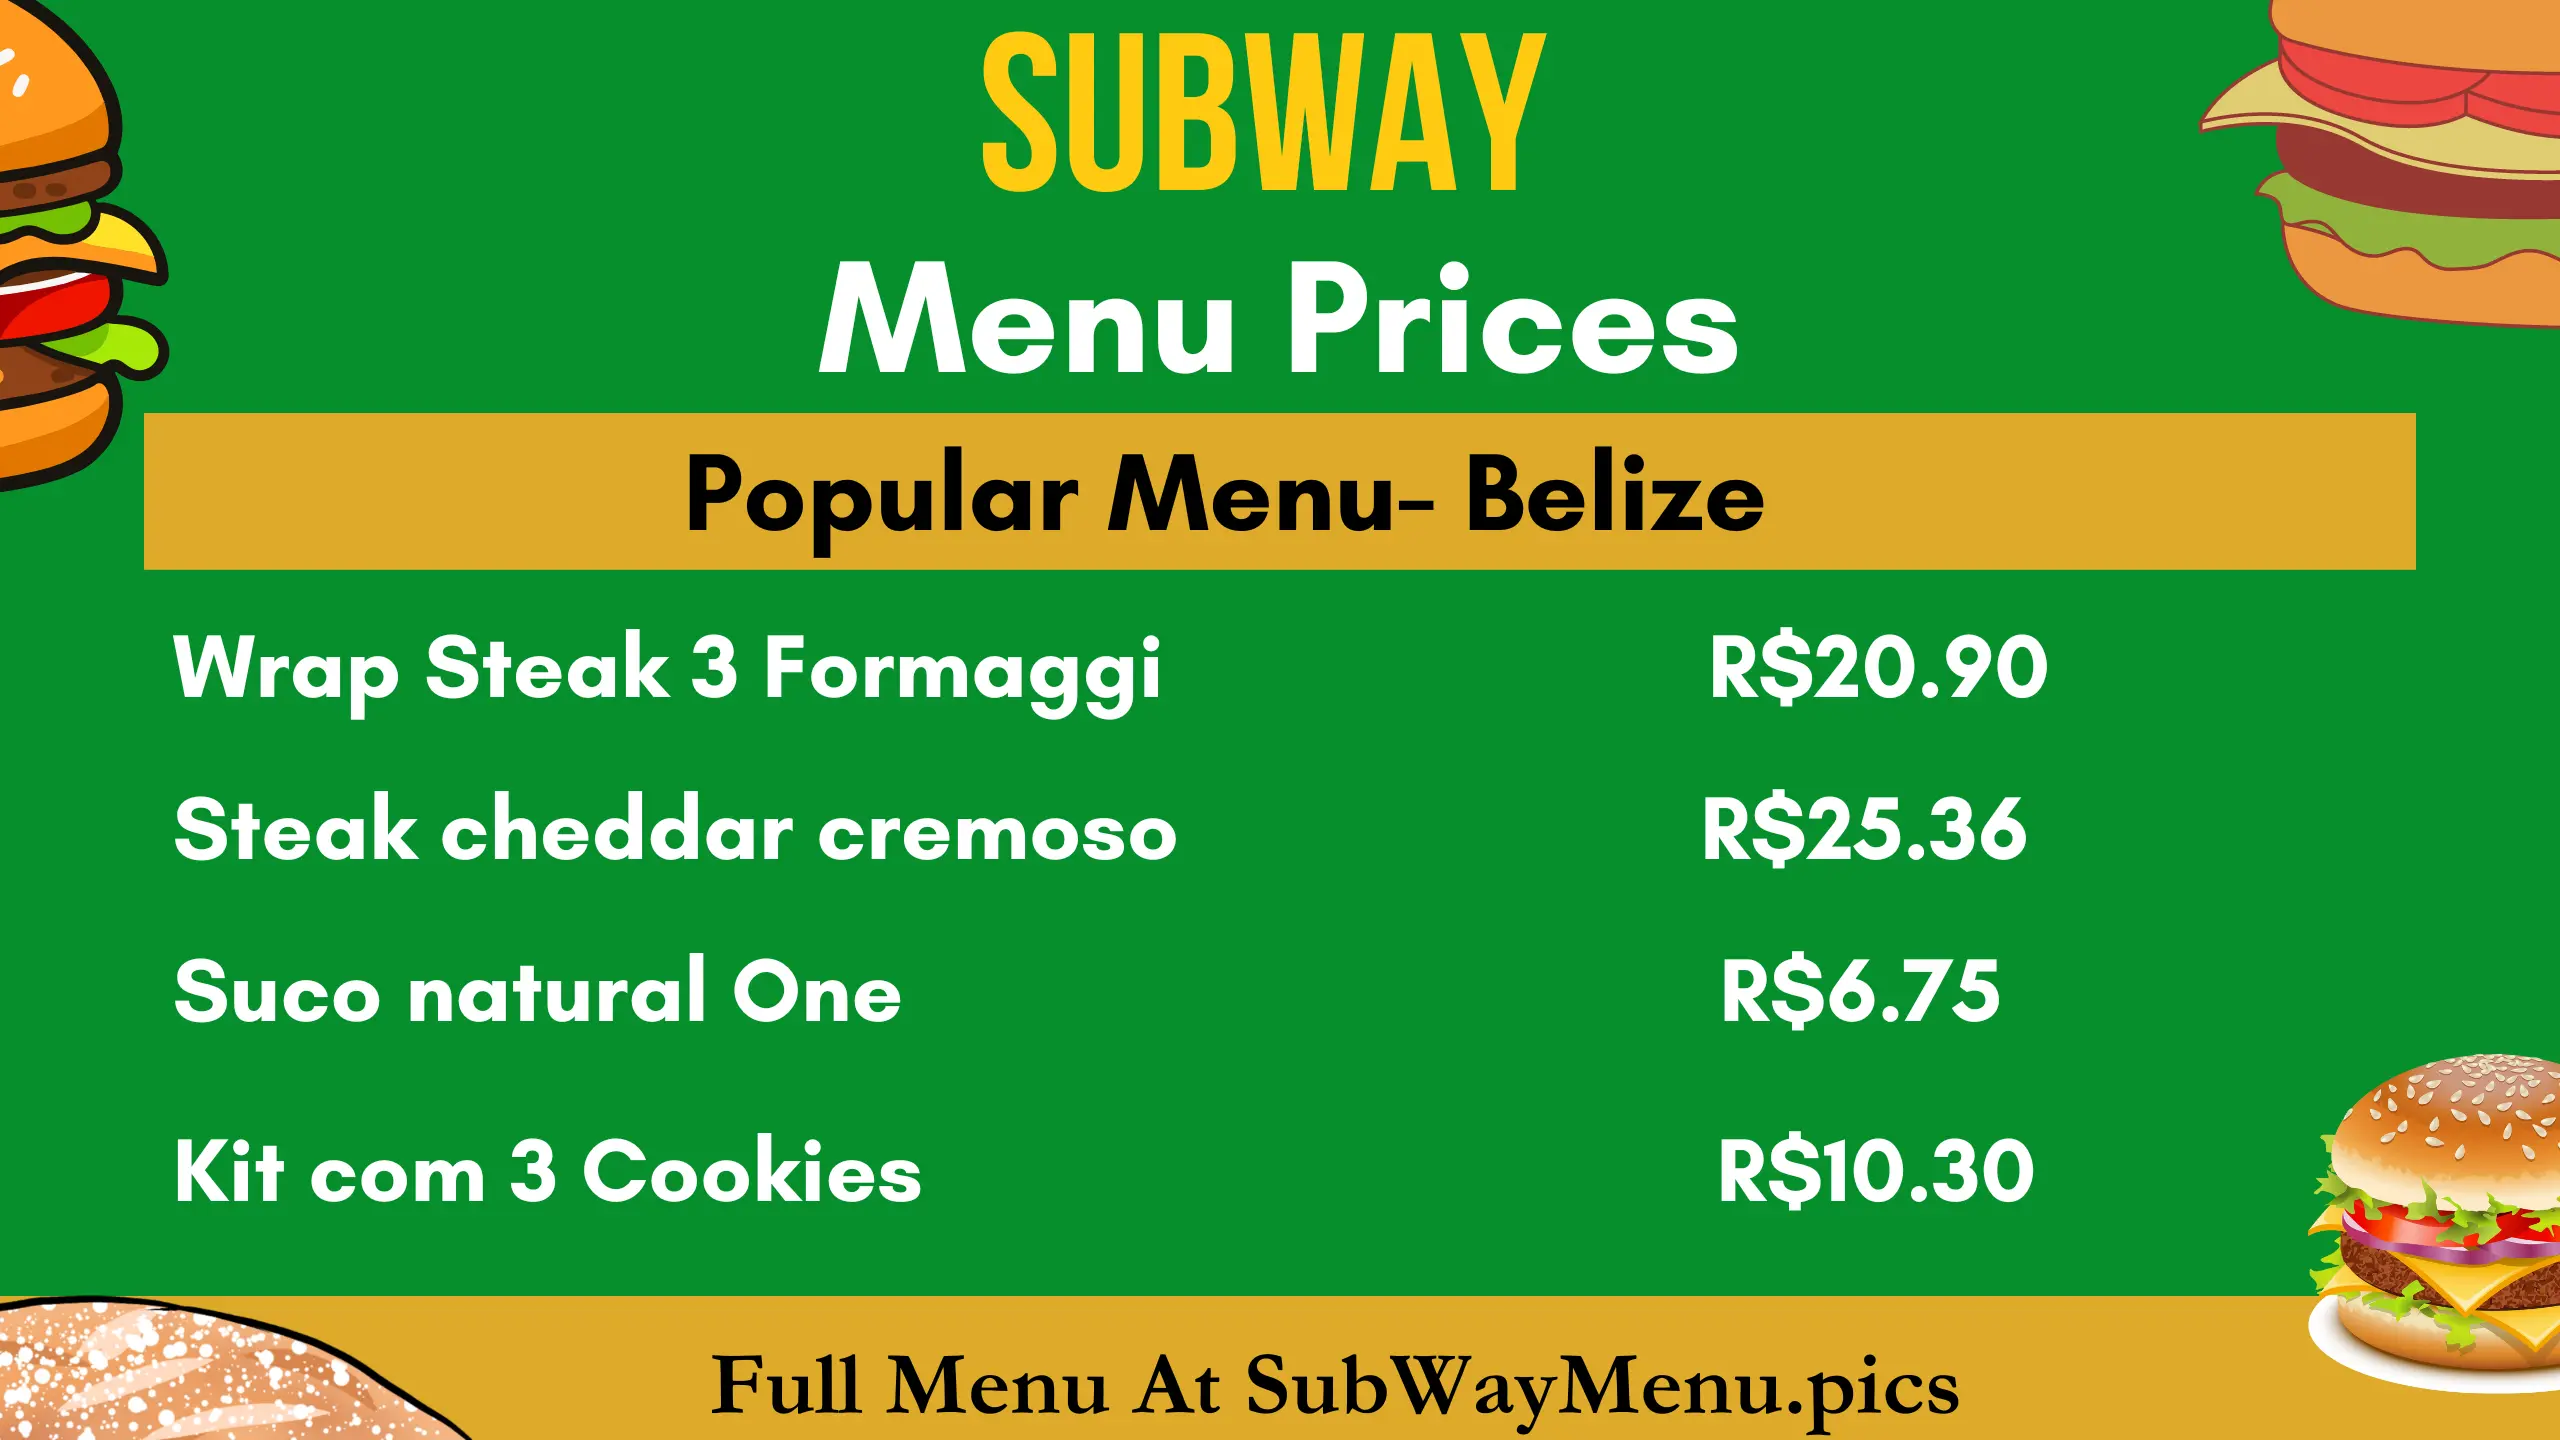 Subway Menu Prices Belize